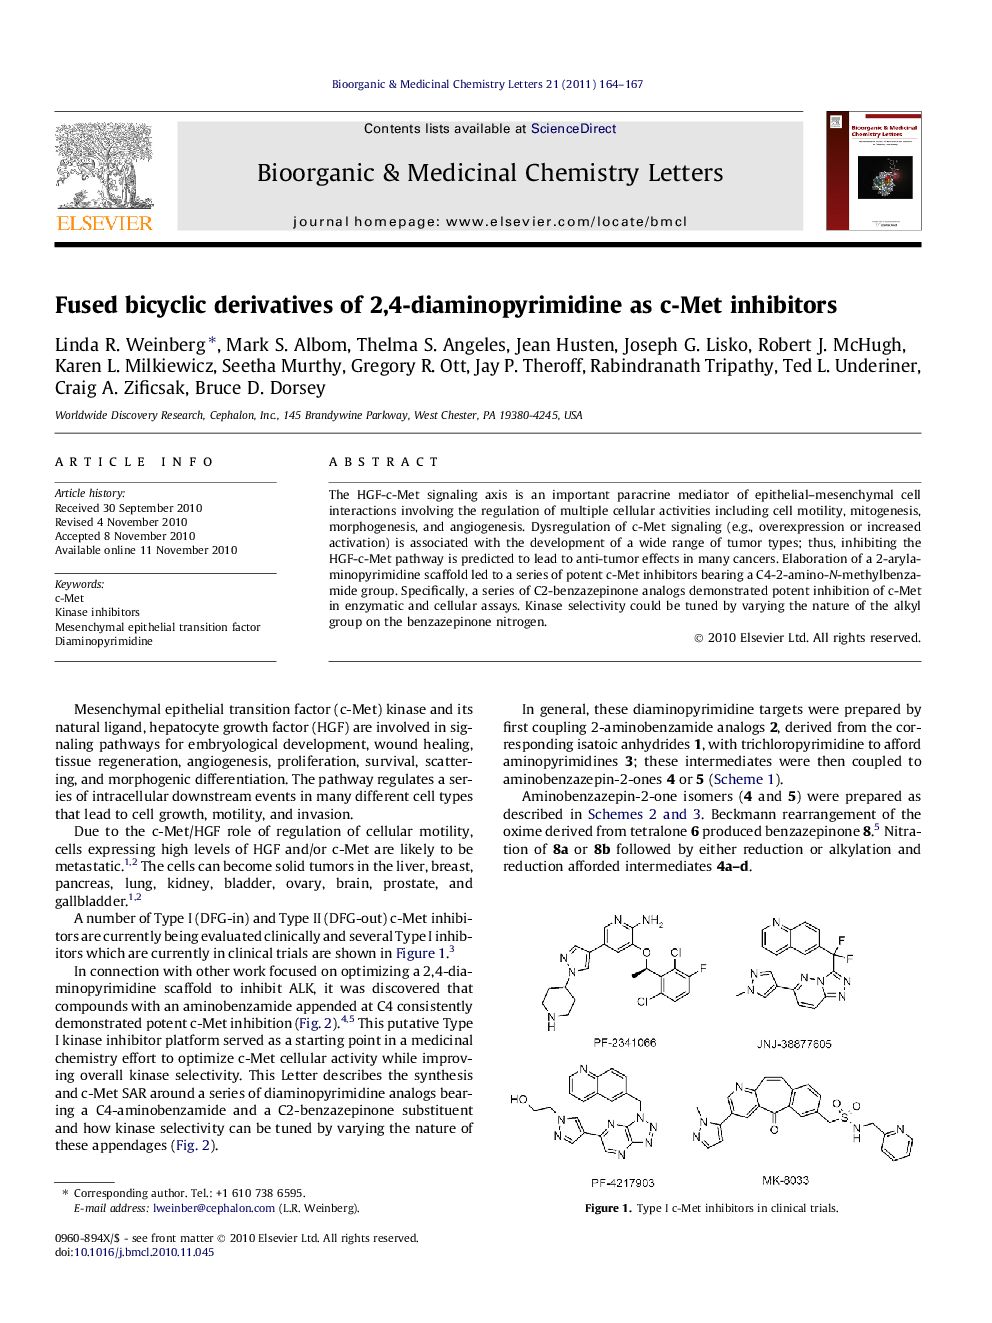 Fused bicyclic derivatives of 2,4-diaminopyrimidine as c-Met inhibitors